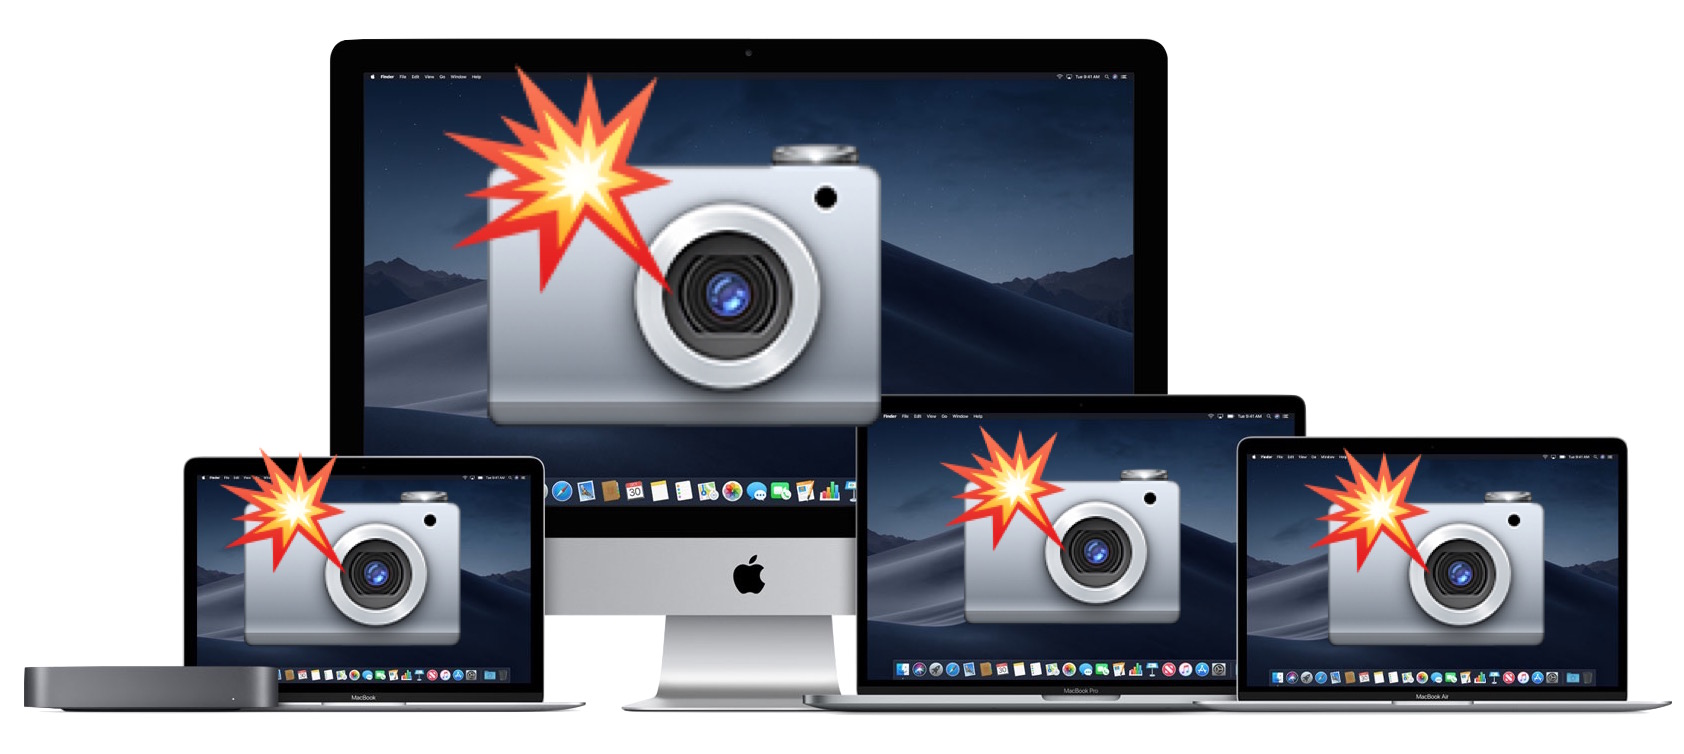 How to Take Screenshots on Mac